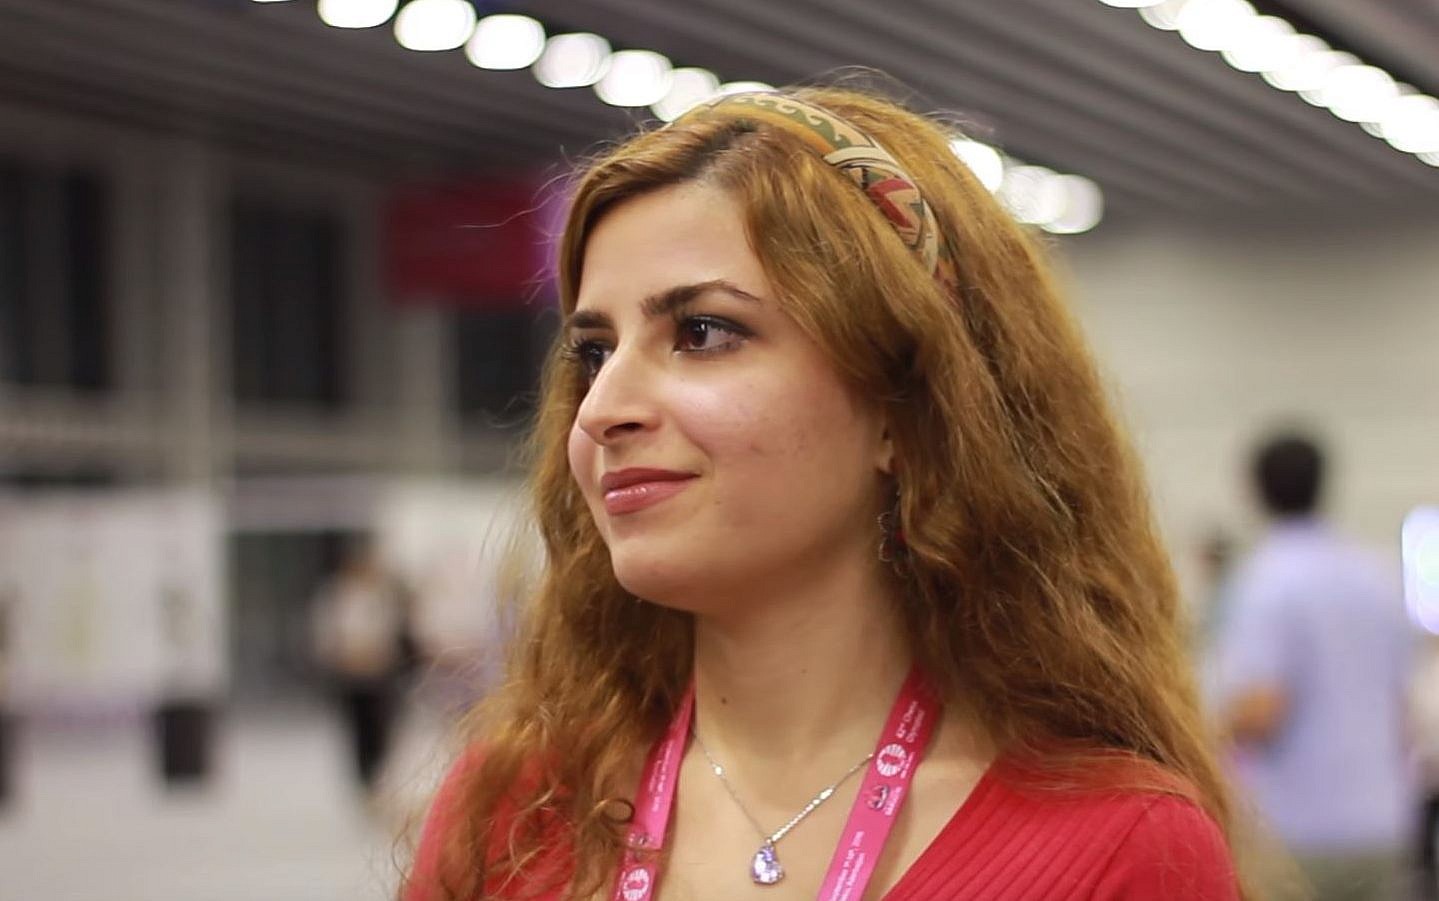 Iranian chess player 'not myself' with hijab on